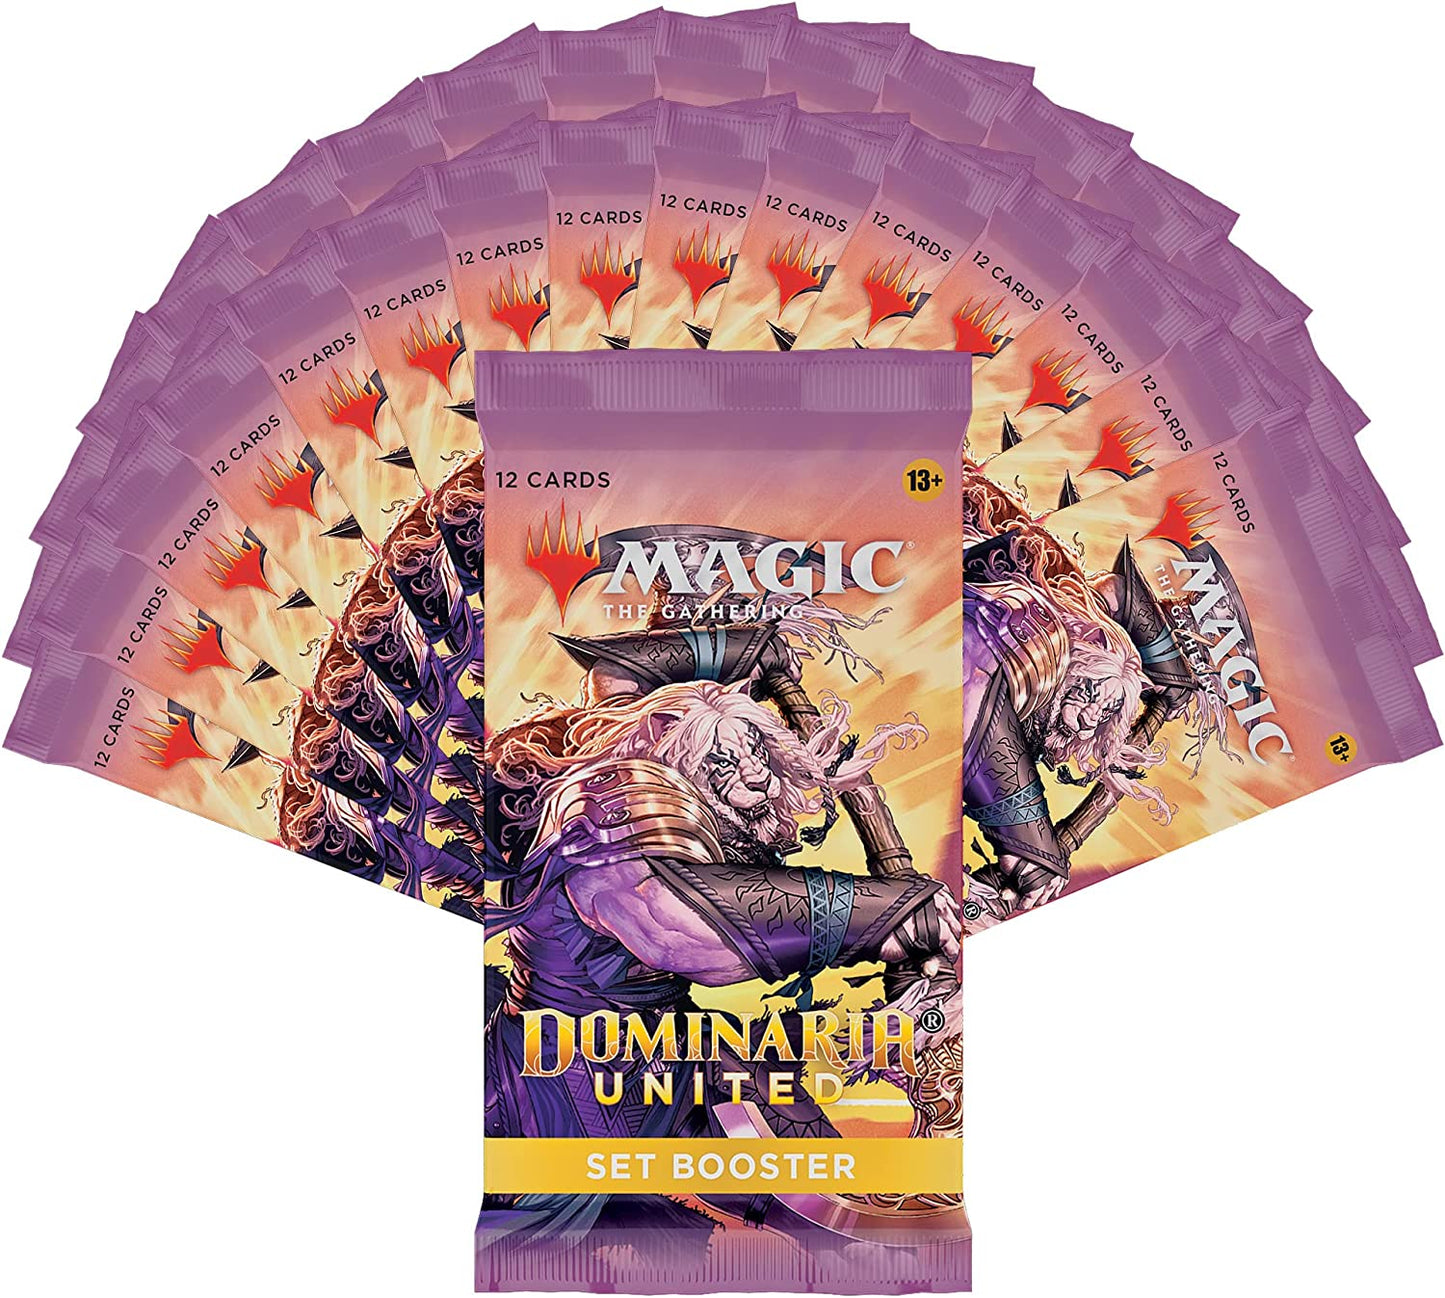 Magic: The Gathering Set Booster Box - Dominaria United